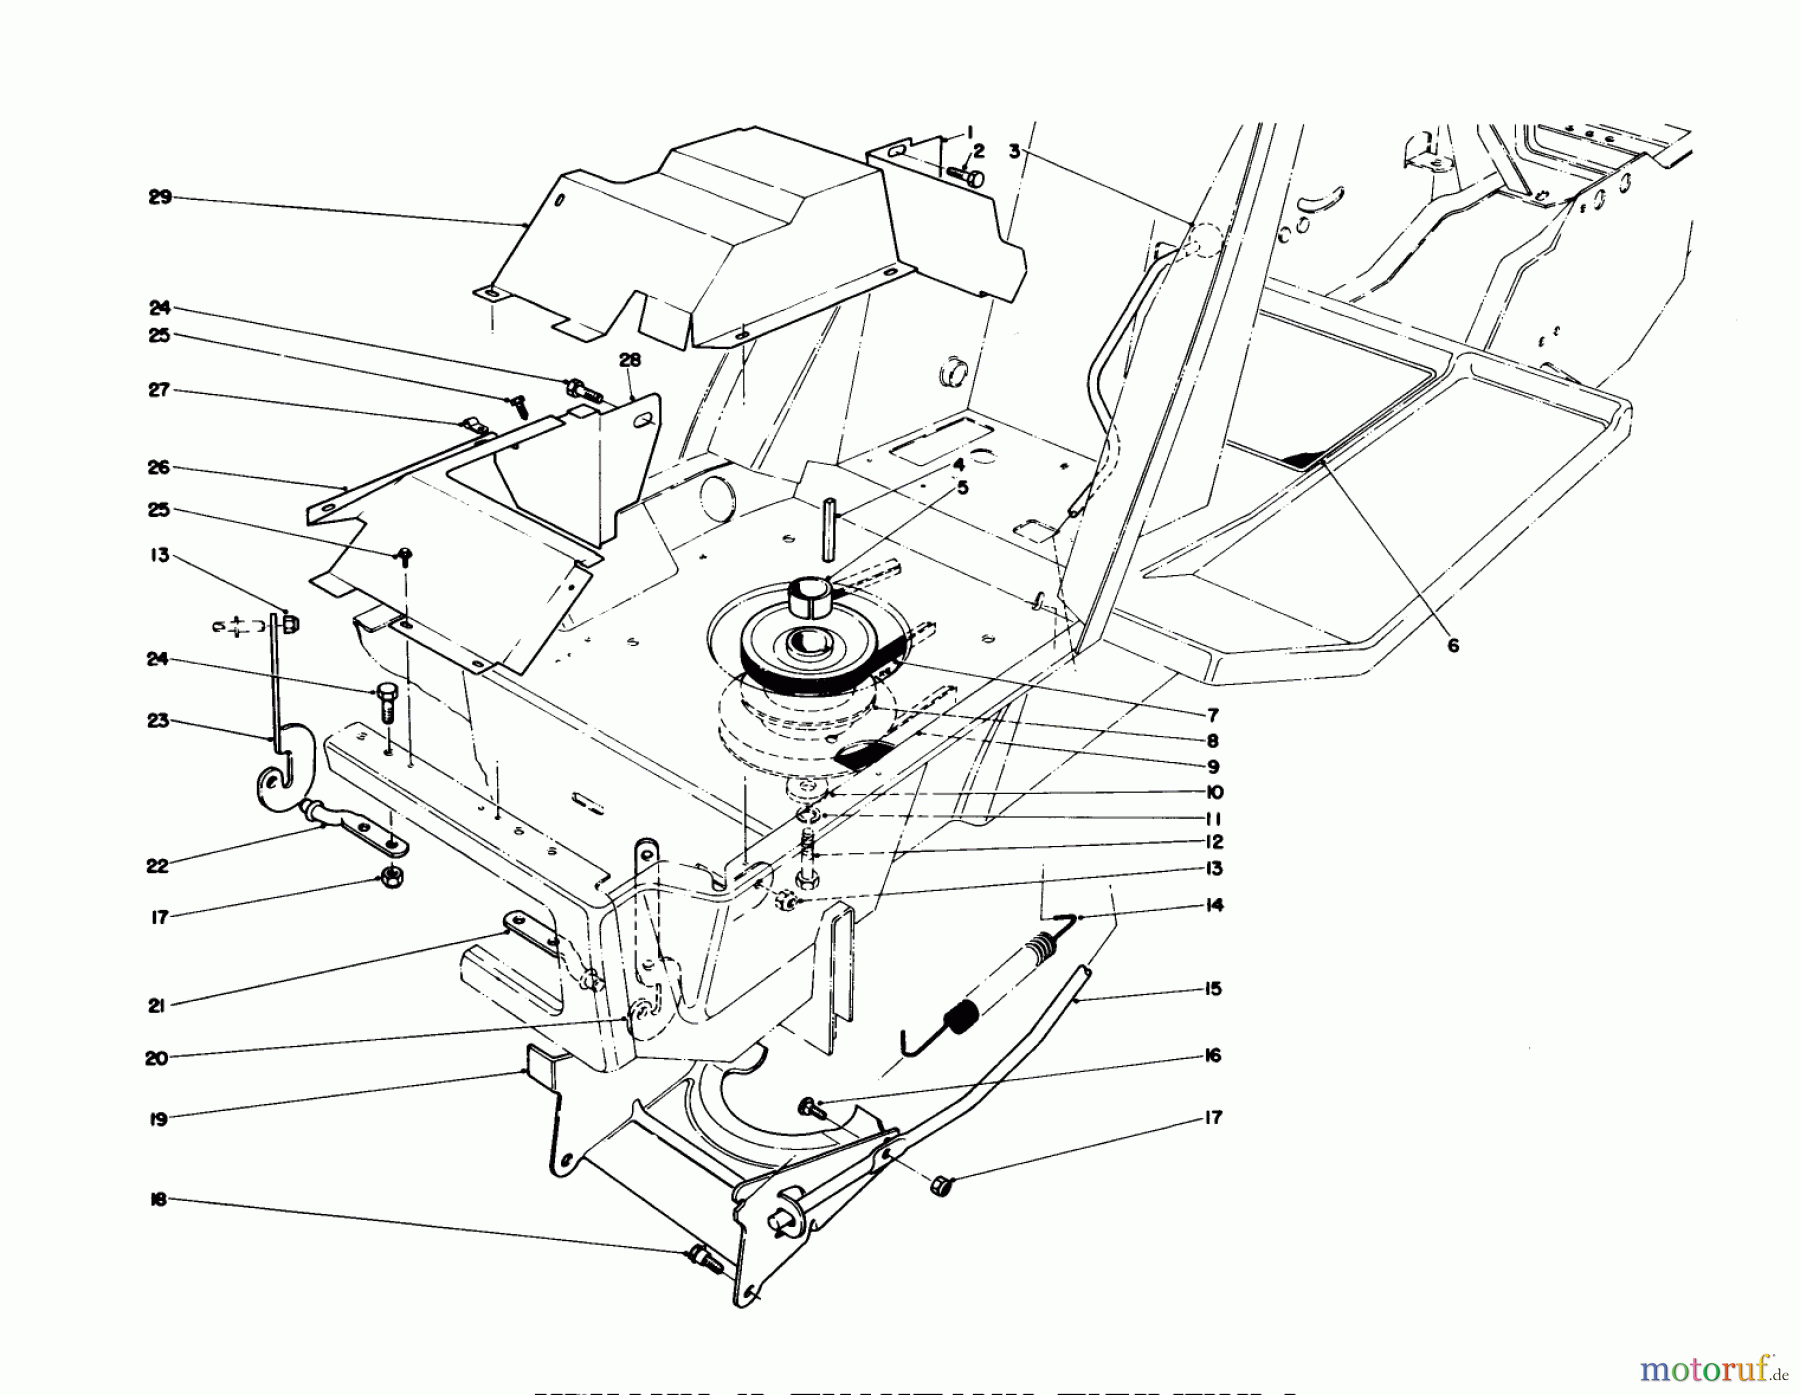  Toro Neu Mowers, Lawn & Garden Tractor Seite 1 57300 (8-32) - Toro 8-32 Front Engine Rider, 1977 (7000001-7999999) CLUTCH & ACTUATOR ASSEMBLY